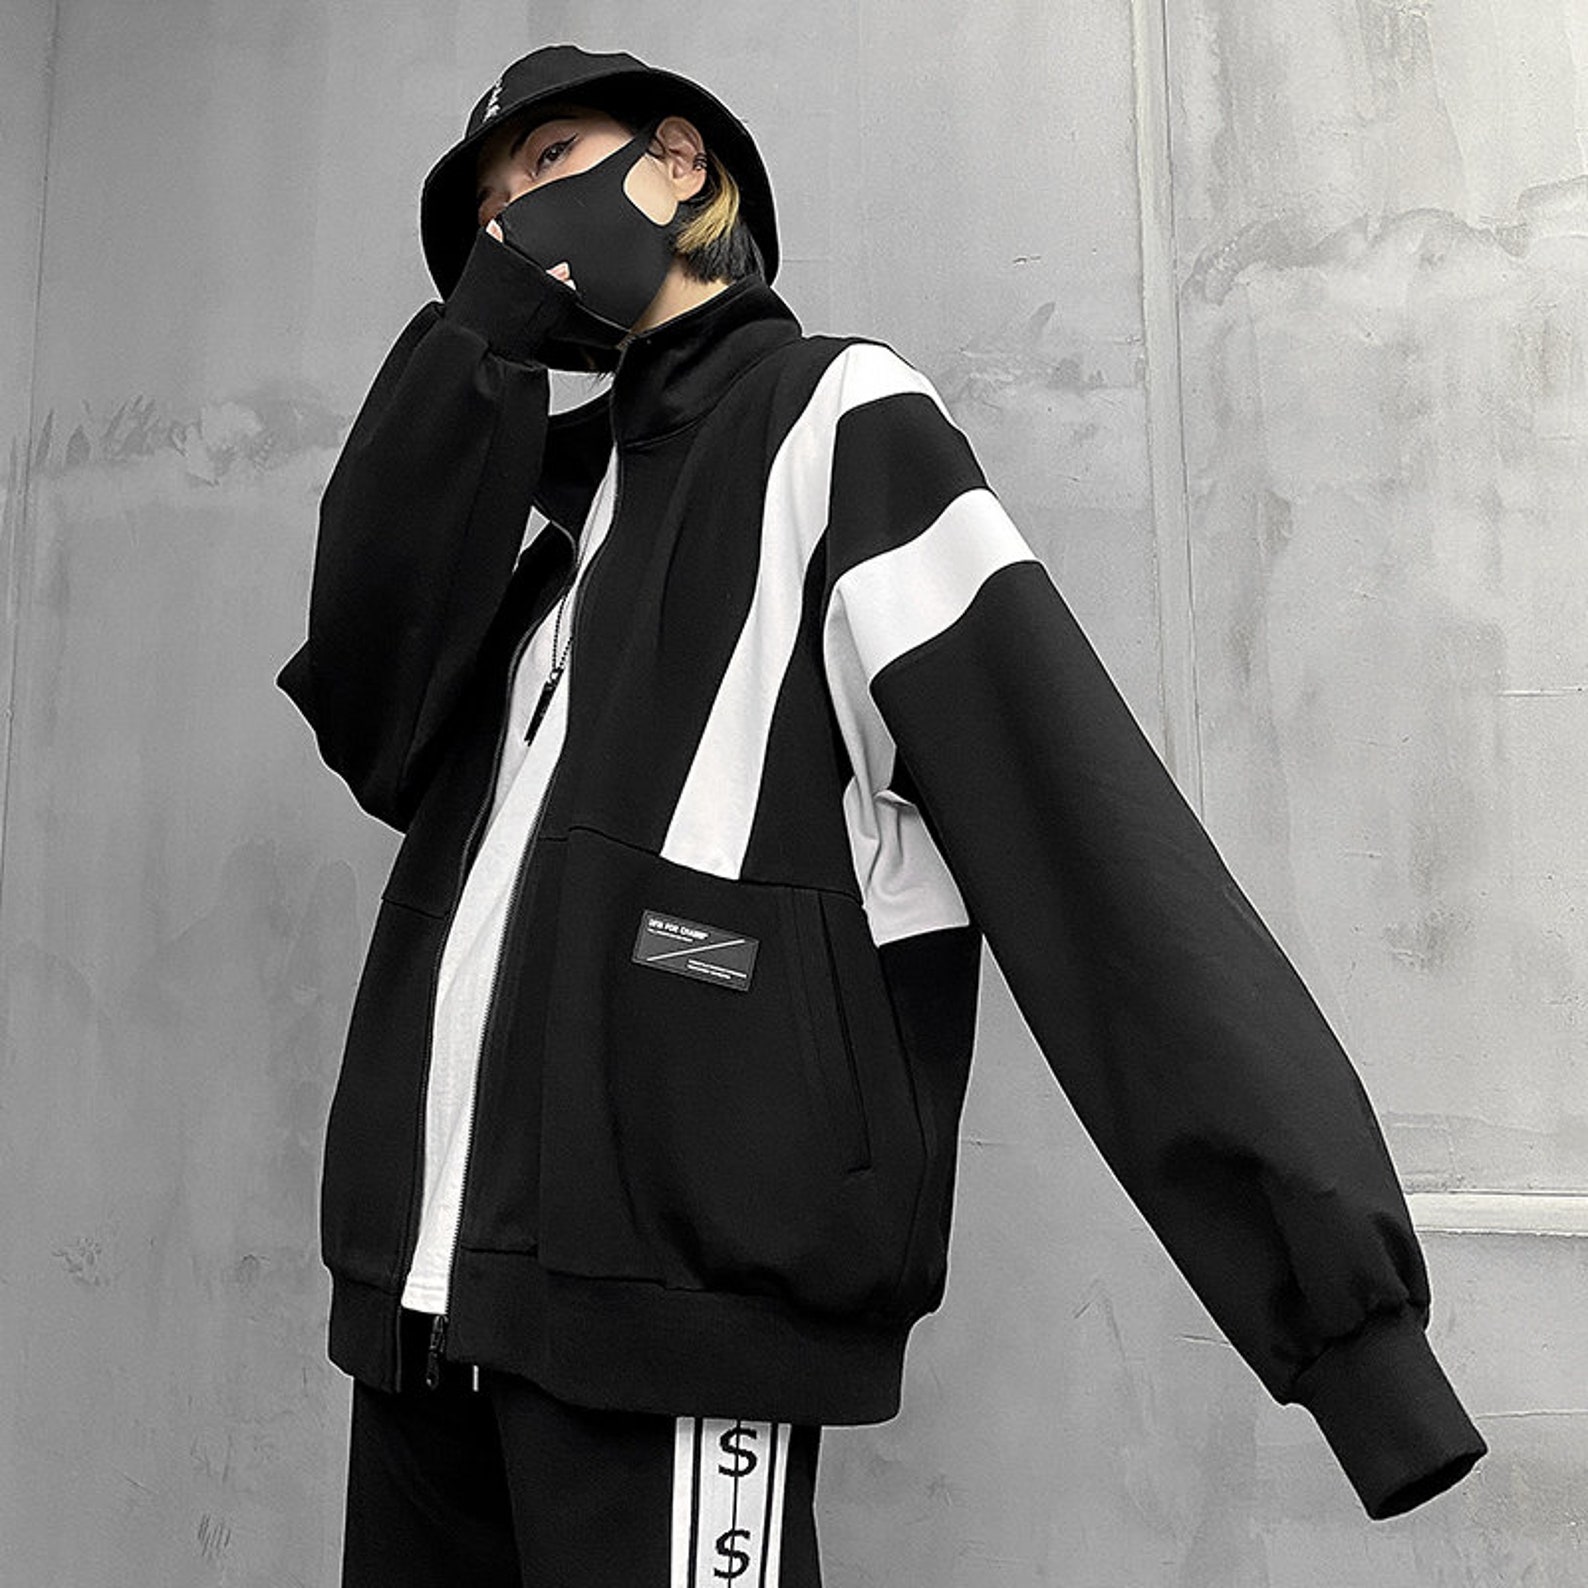 Woman Techwear Jacket Cool Cyberpunk Futuristic Deconstructed | Etsy